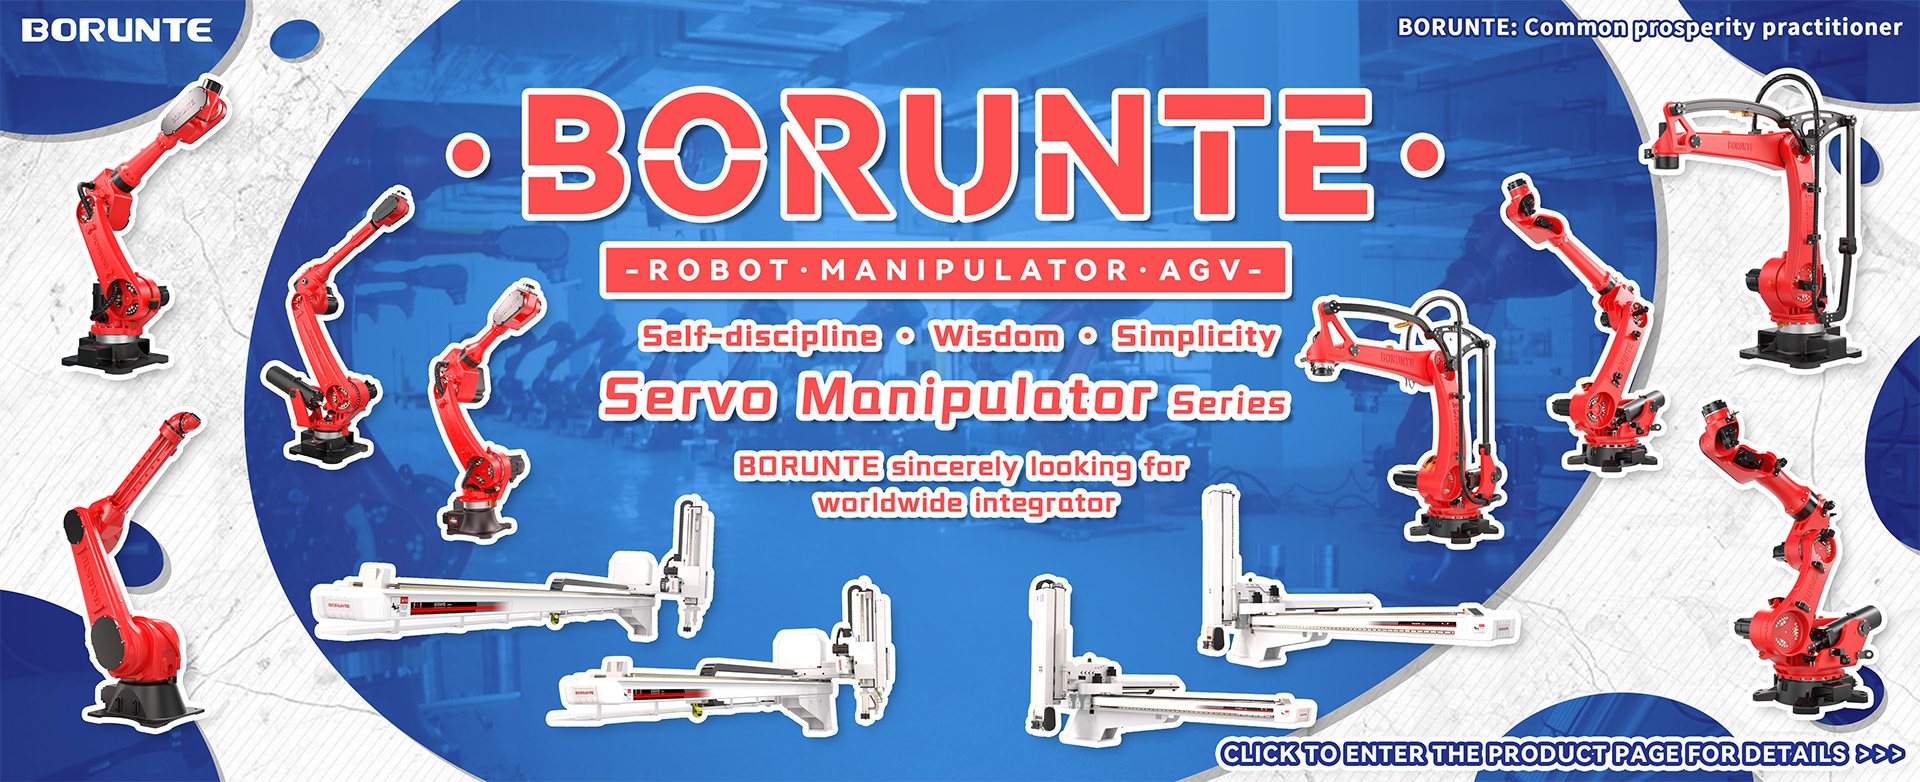 2. BORUNTE manipulator promotional image